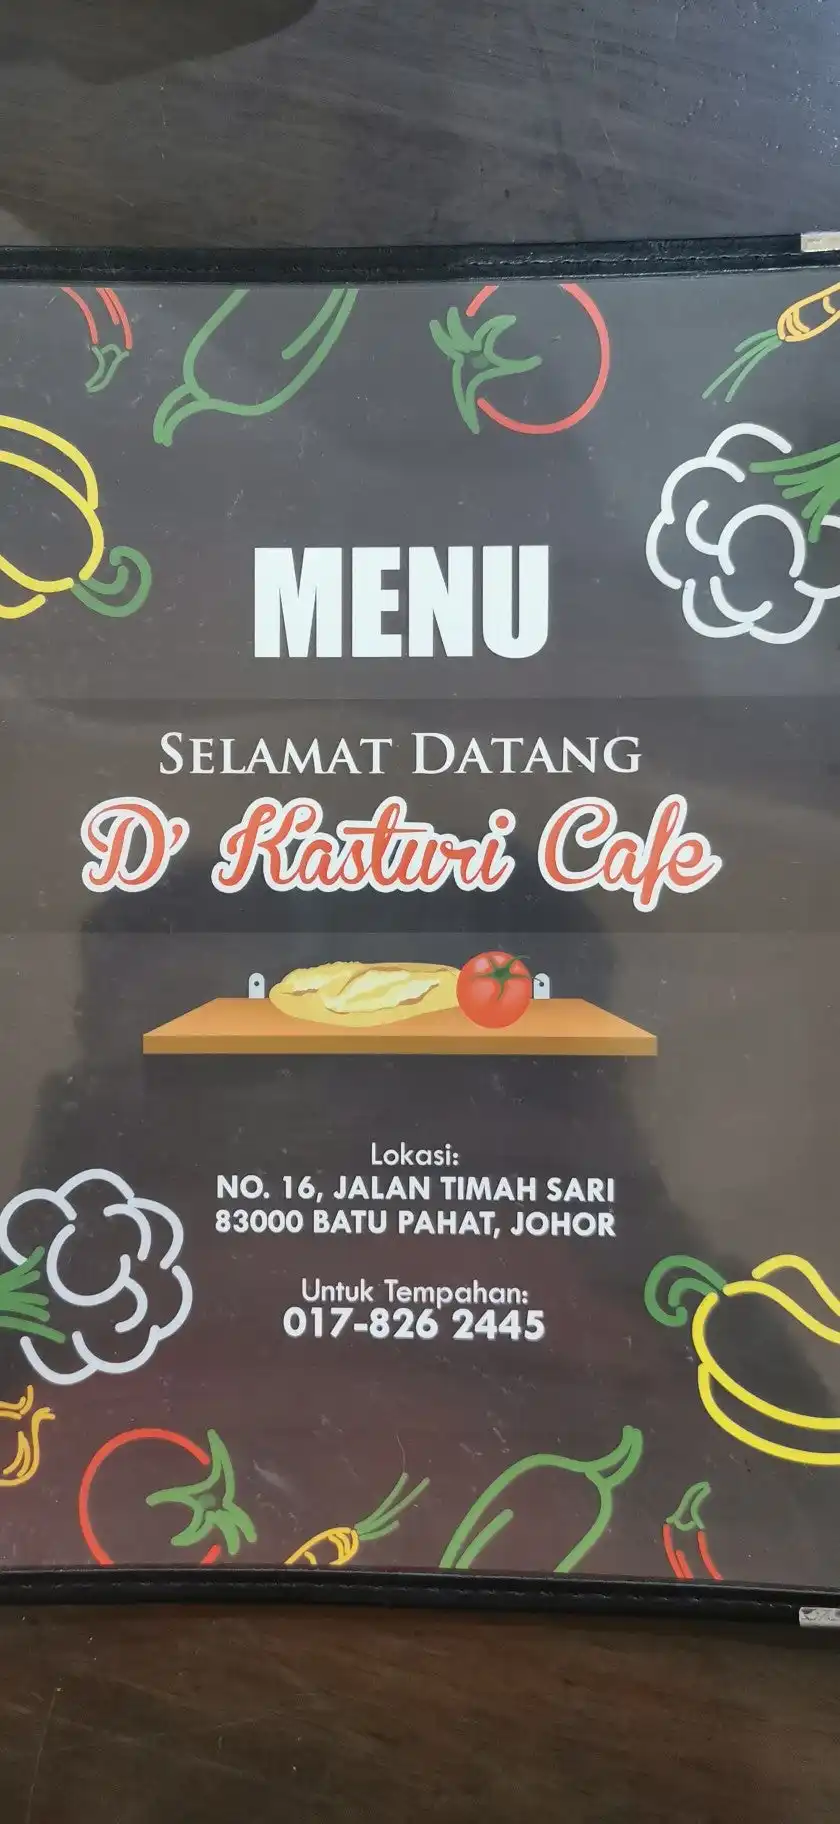 D'Kasturi Cafe